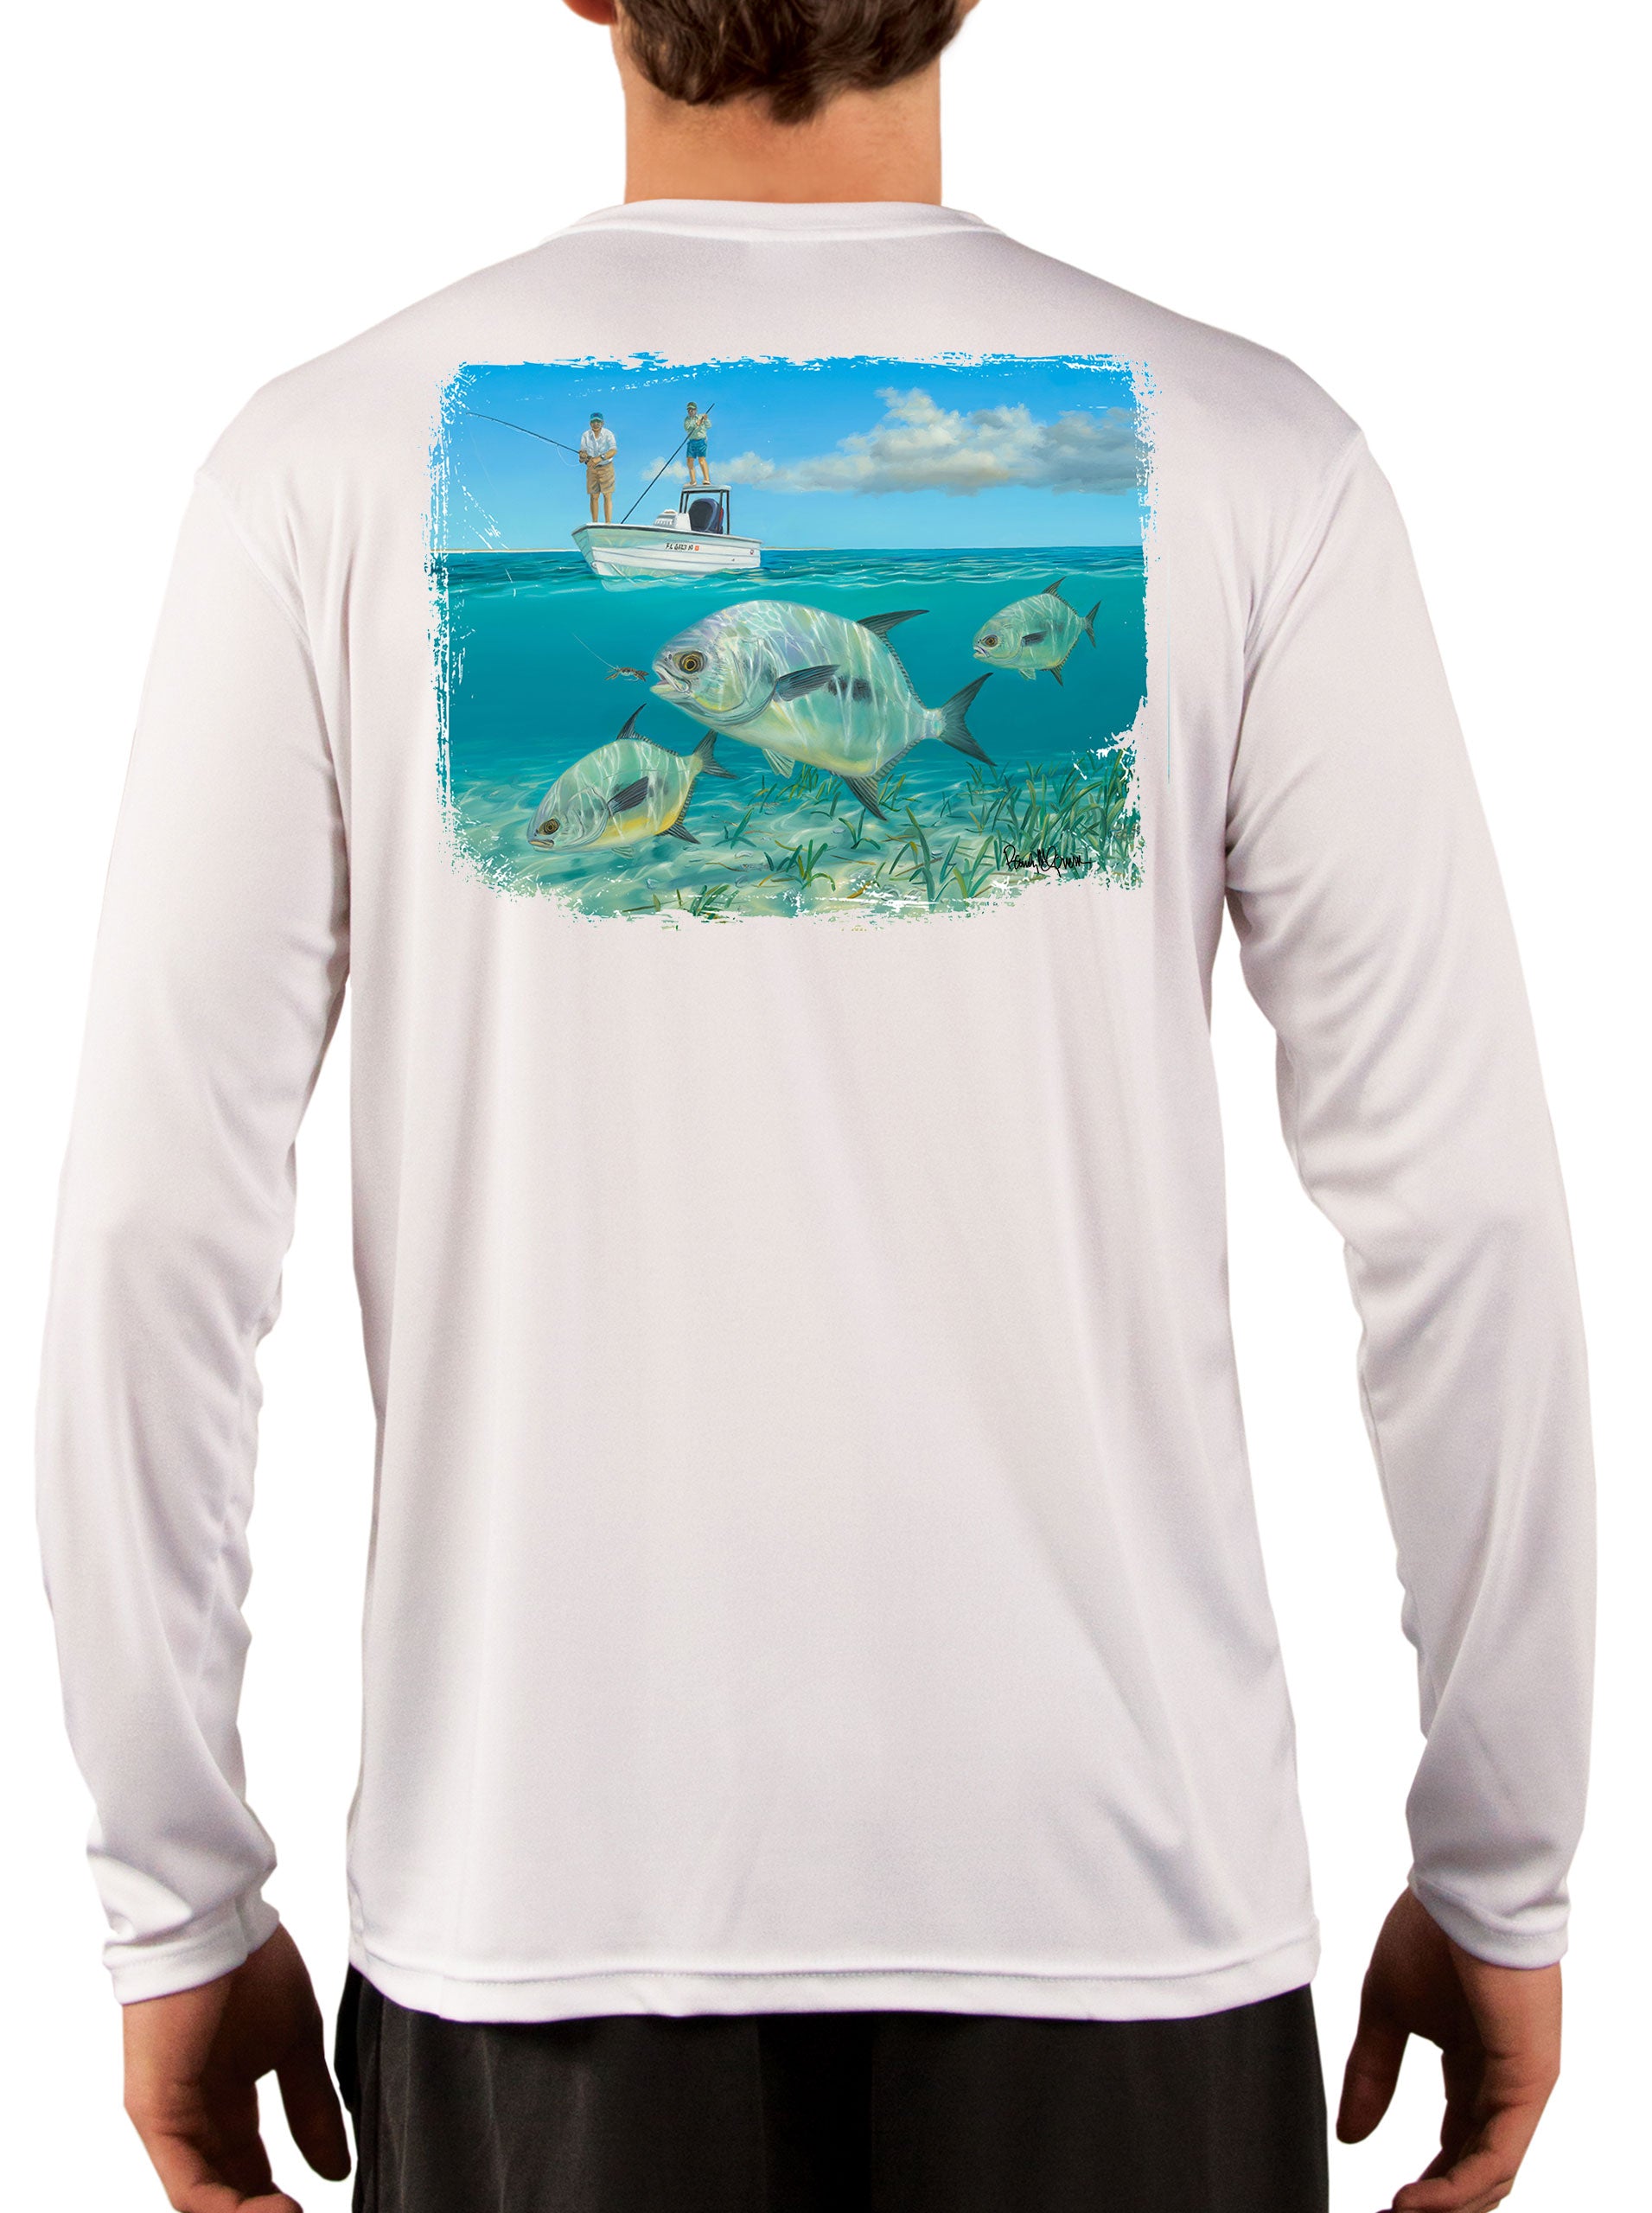 Permit Paradise Lappy Nation Skiff Life Fishing Shirts For Men